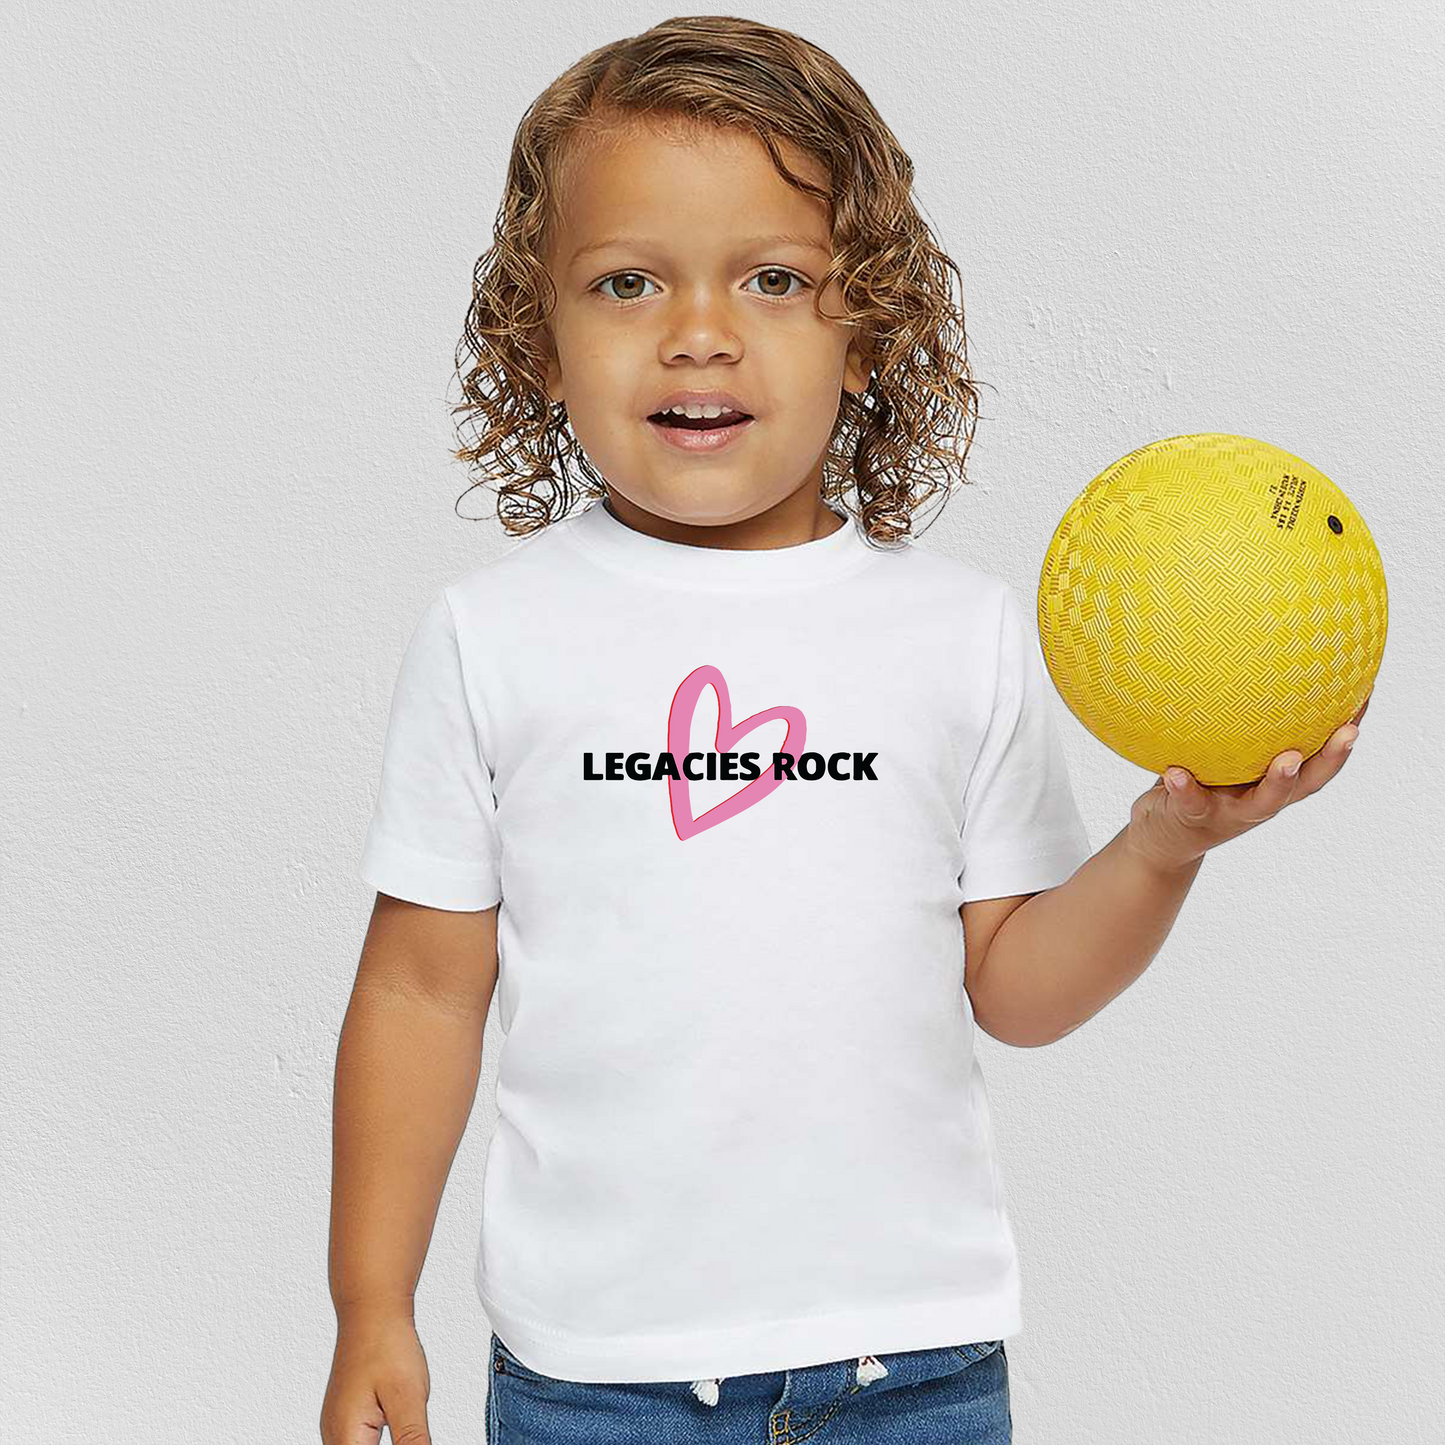 Legacies Rock Official - Toddler T-shirt